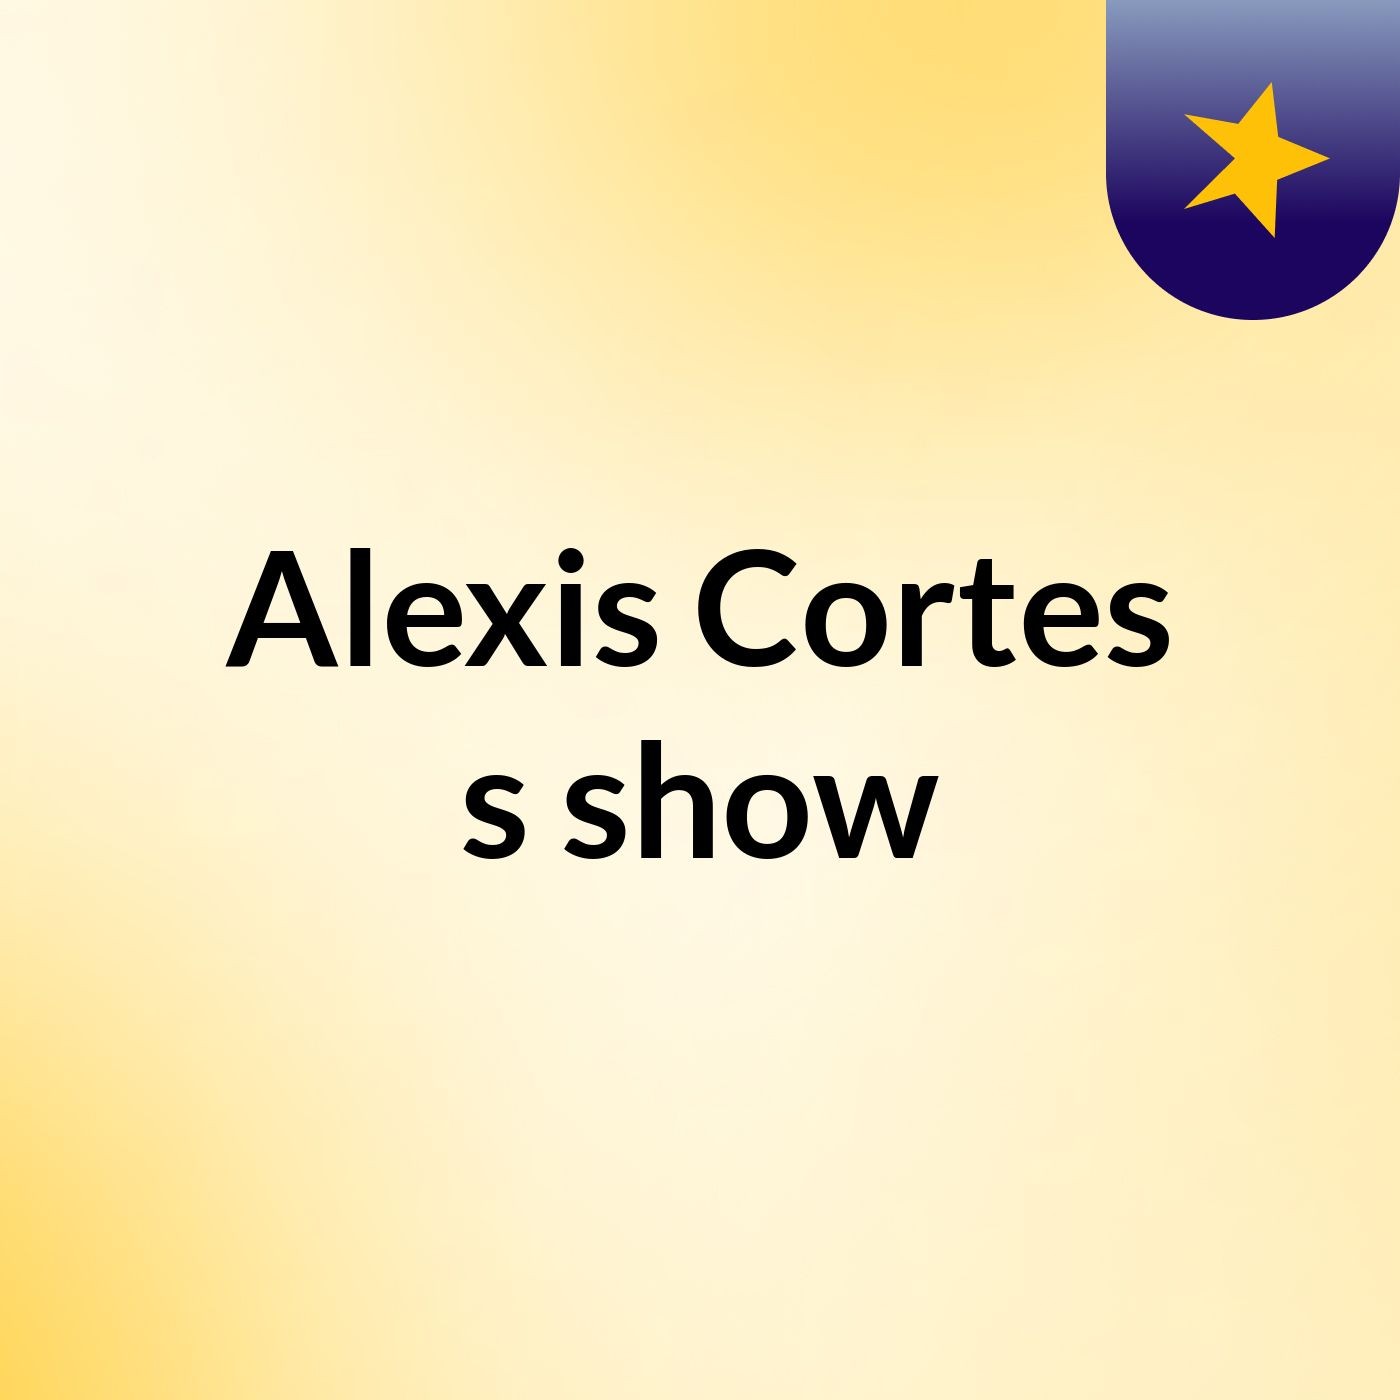 Alexis Cortes's show